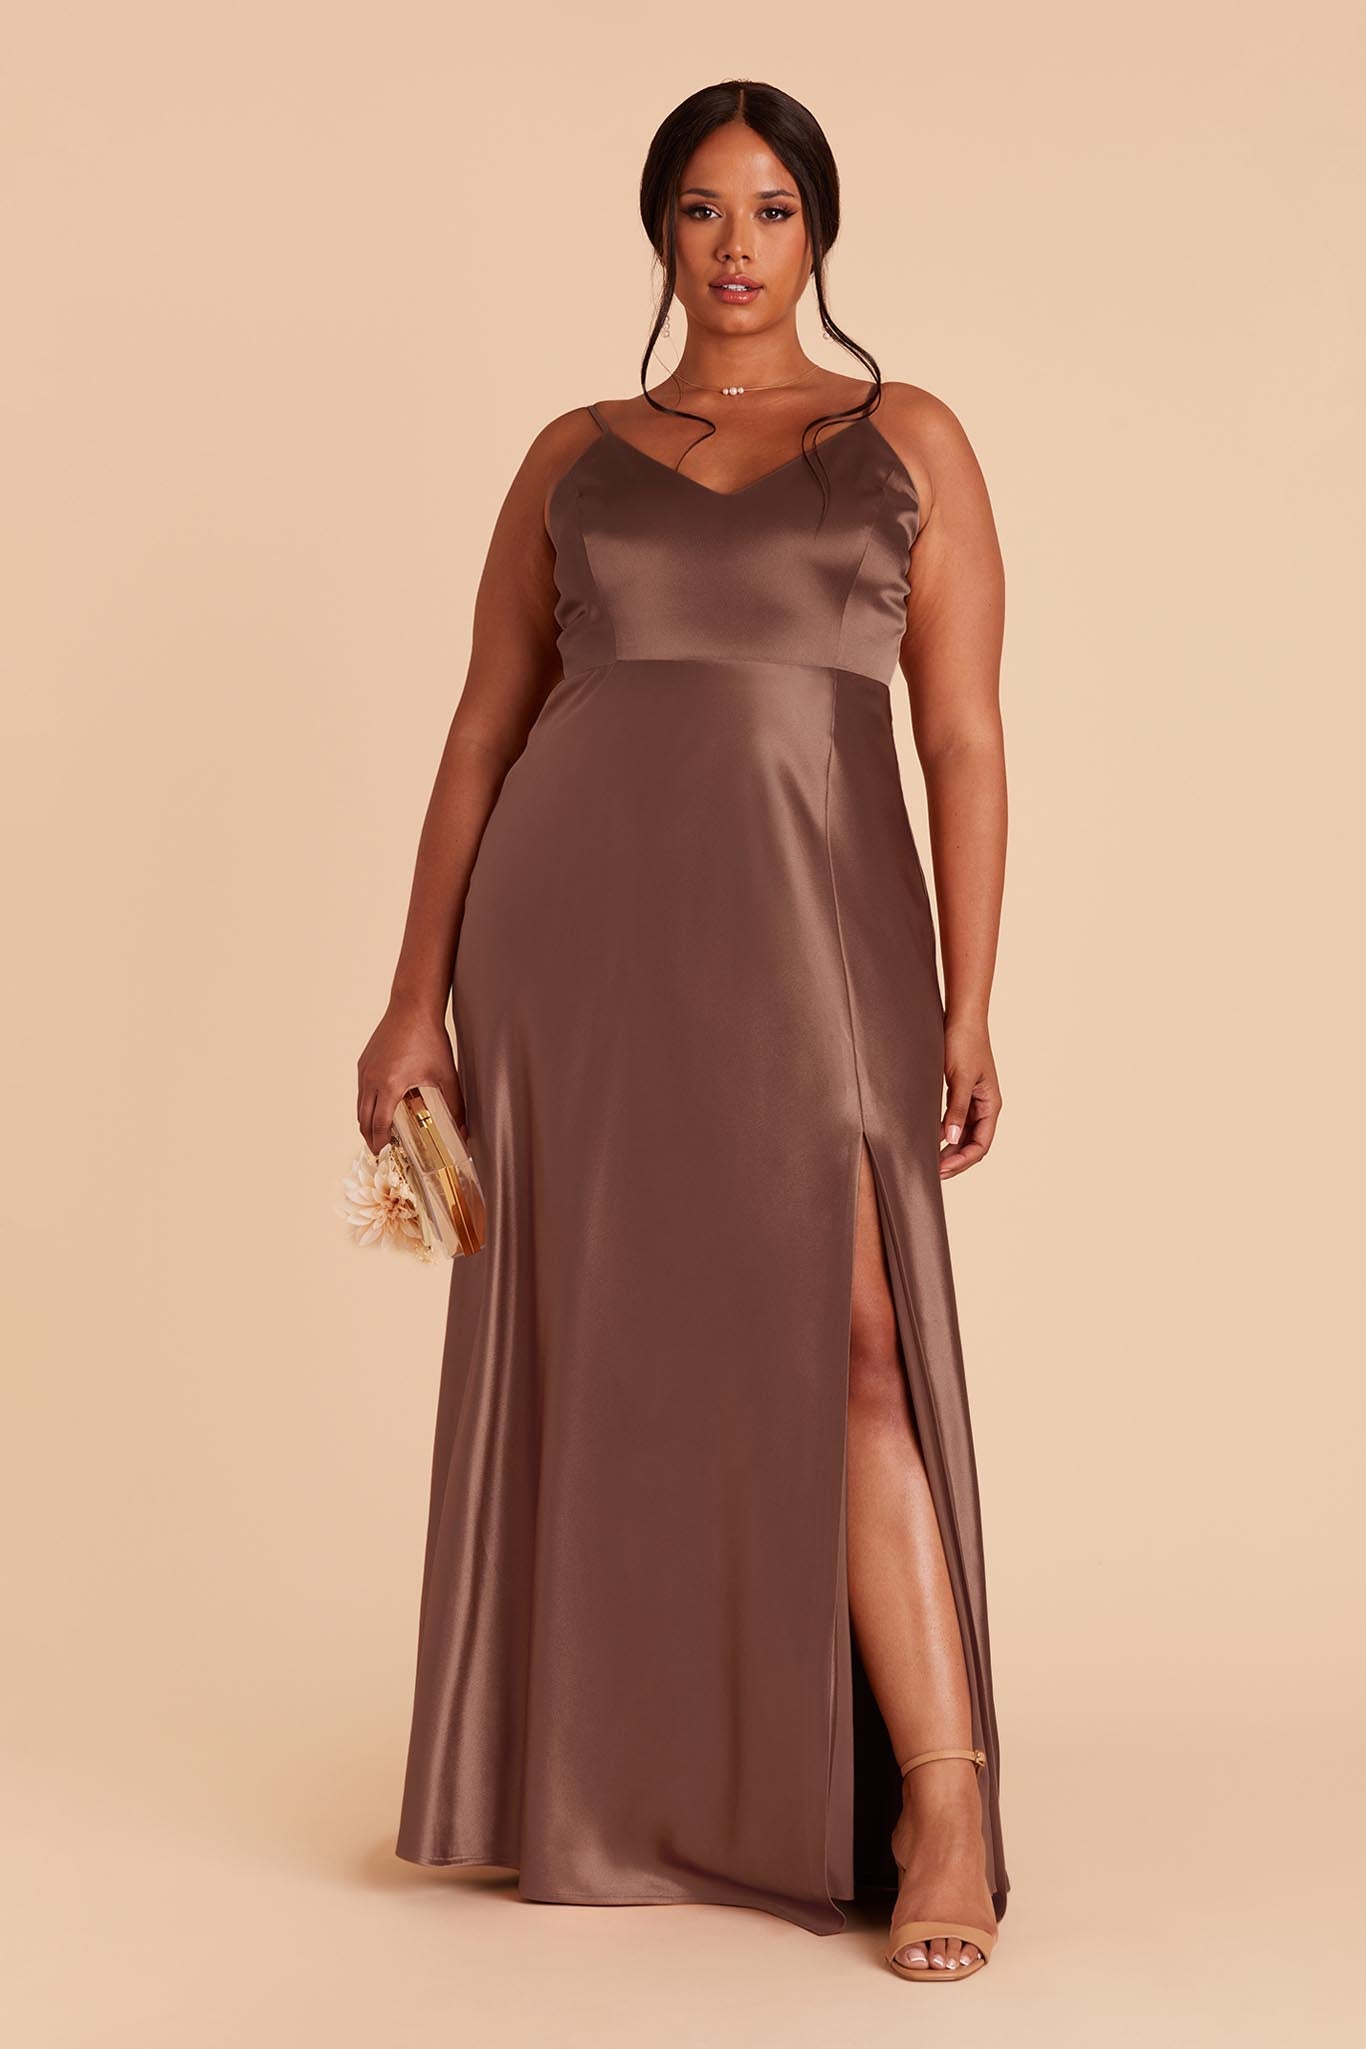 Jay Satin Dress - Chocolate Brown